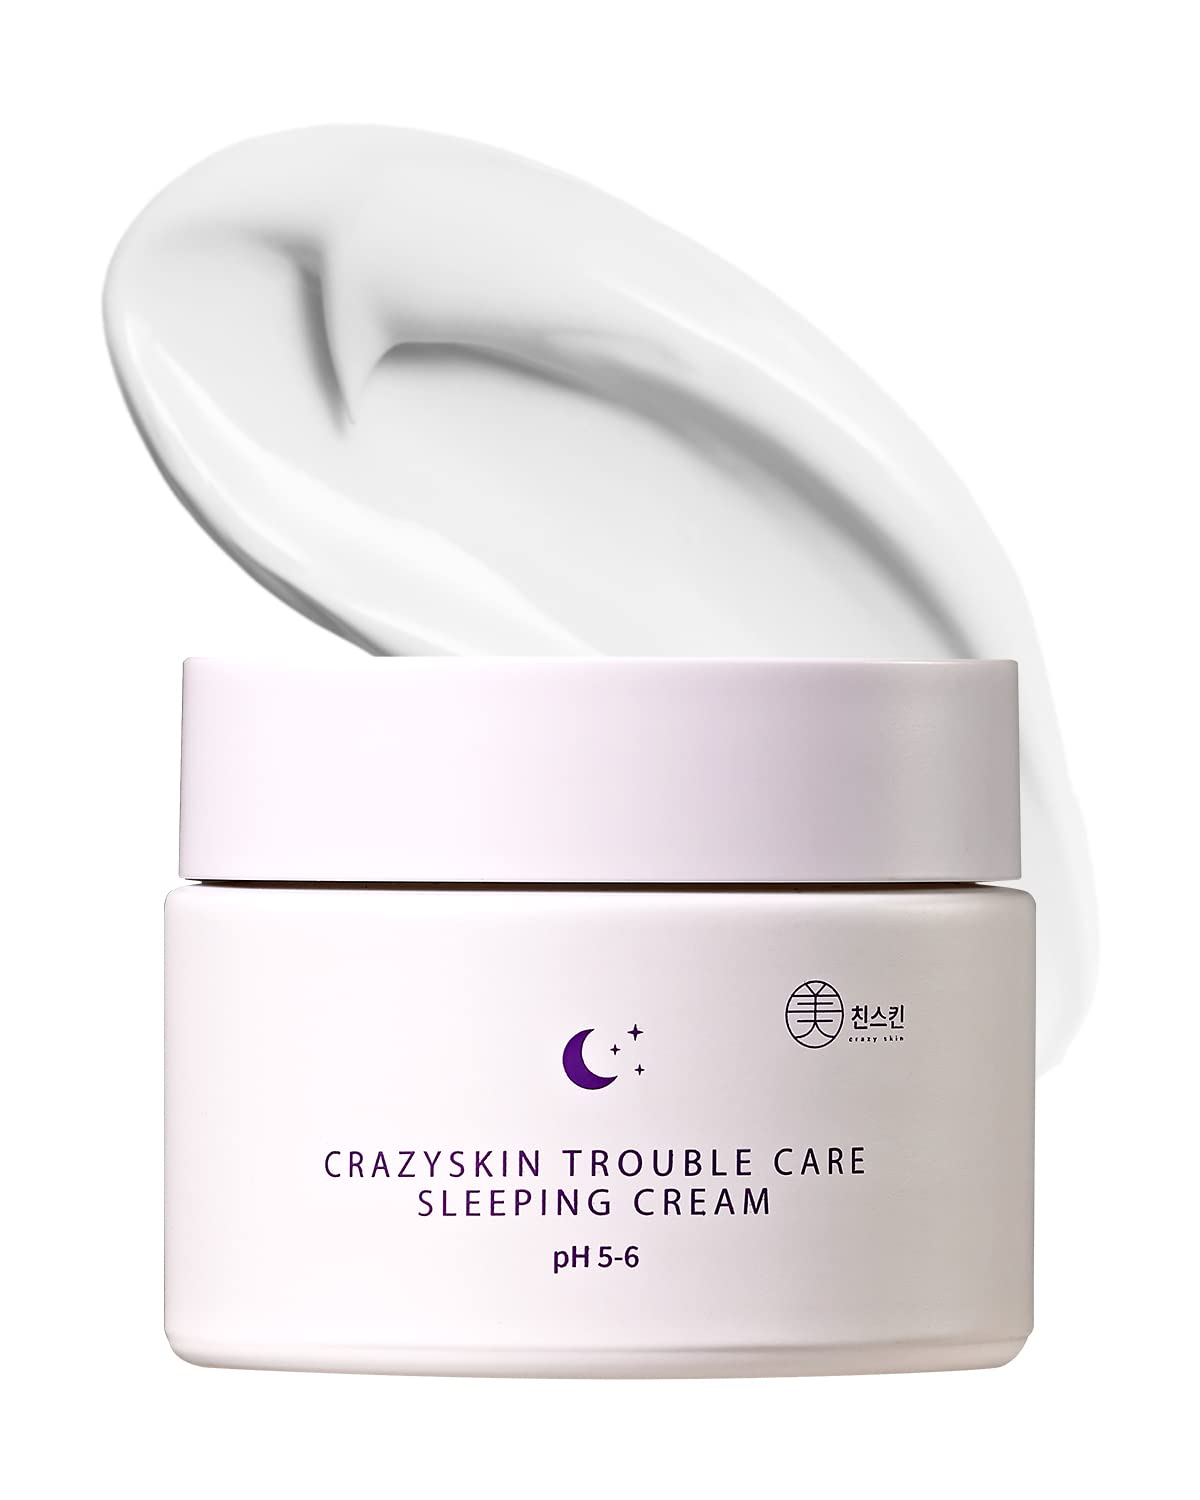 CRAZY SKIN Skin Repair Trouble Care Sleeping Cream 1.76 | Deep Moisturizing pH level 5.5 overnight cream | Moisturizer for acne prone skin | Korean skin care | night mask recovery care